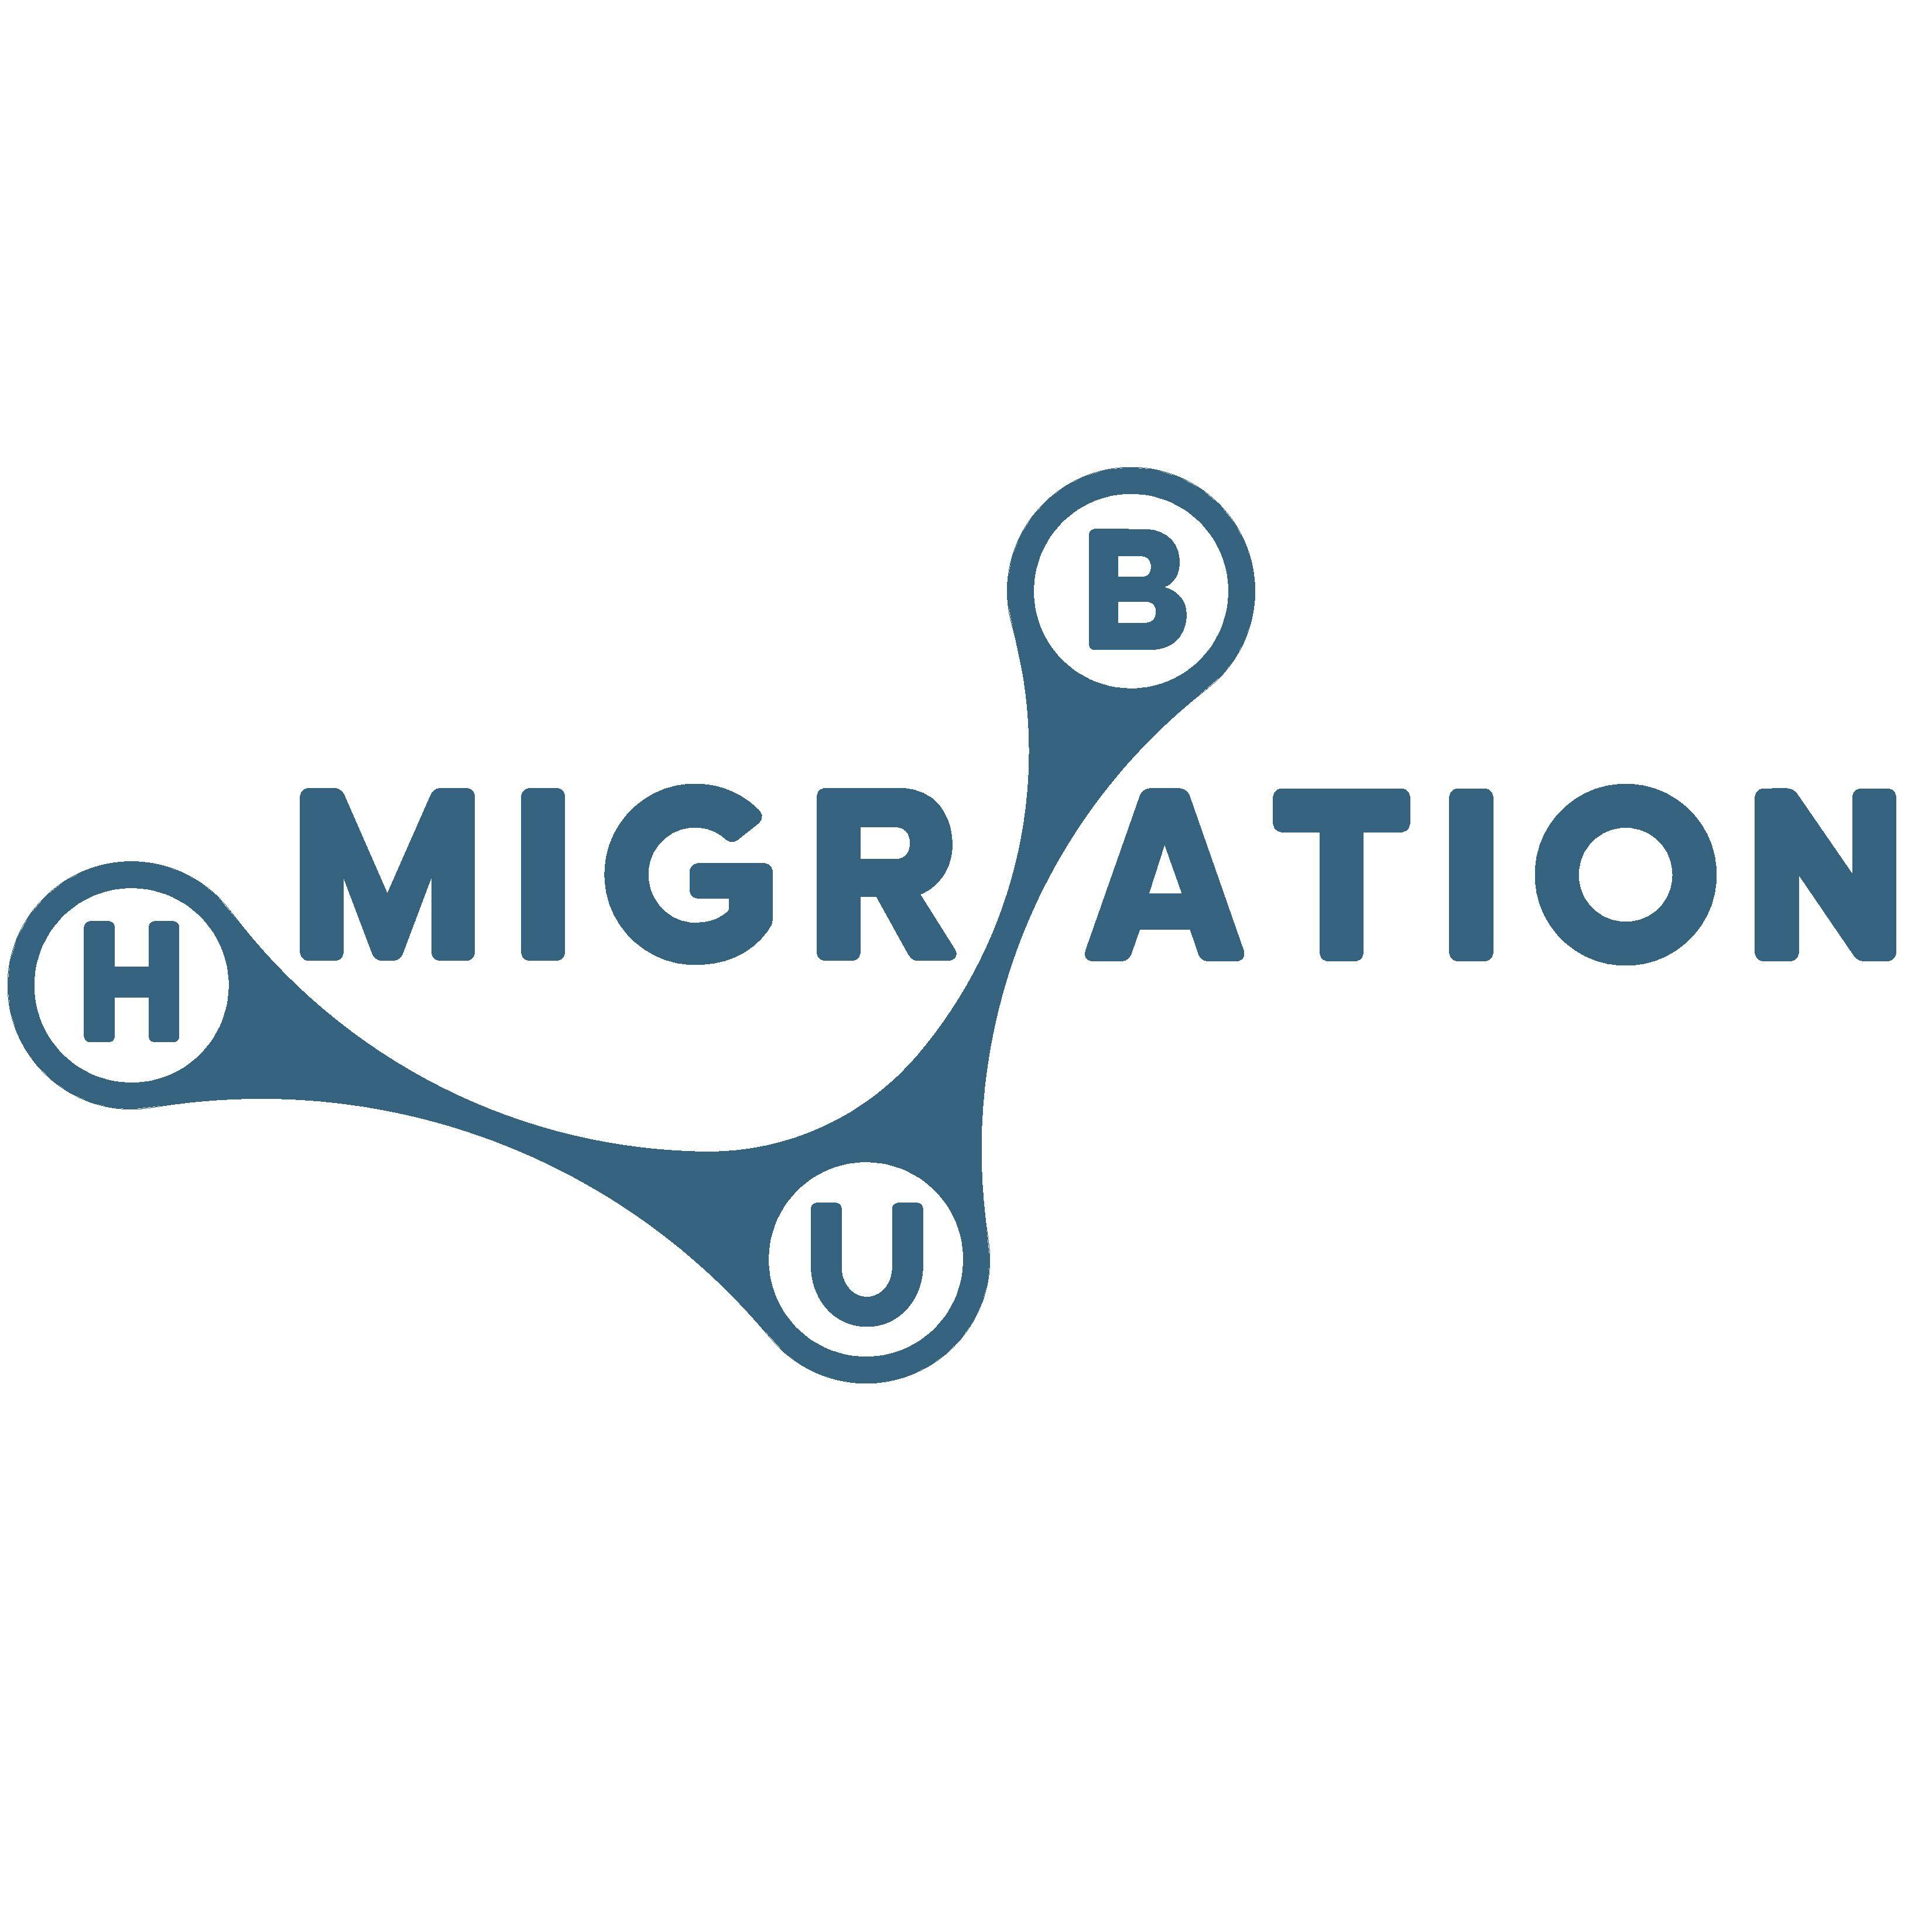 Hub Network Logo - Migration Hub Network | NeedsList